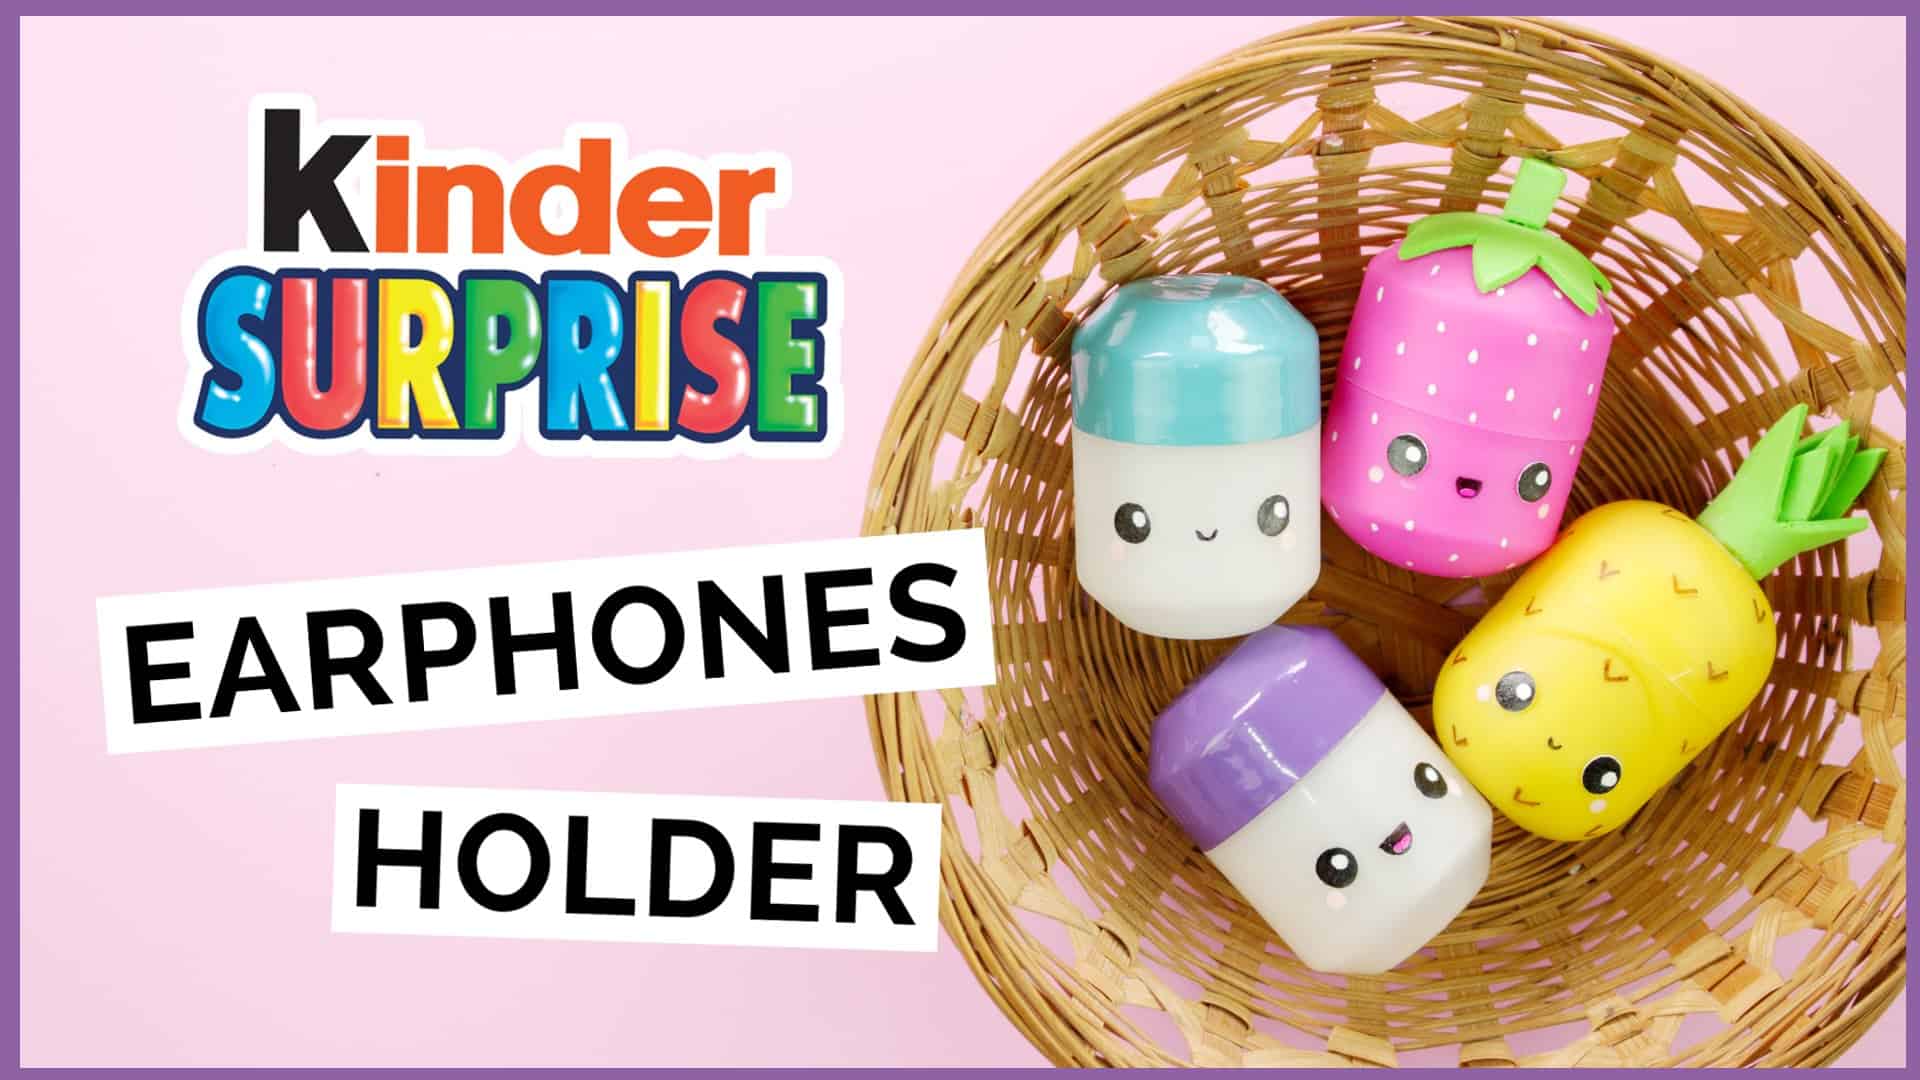 Kinder surprise earphone holders